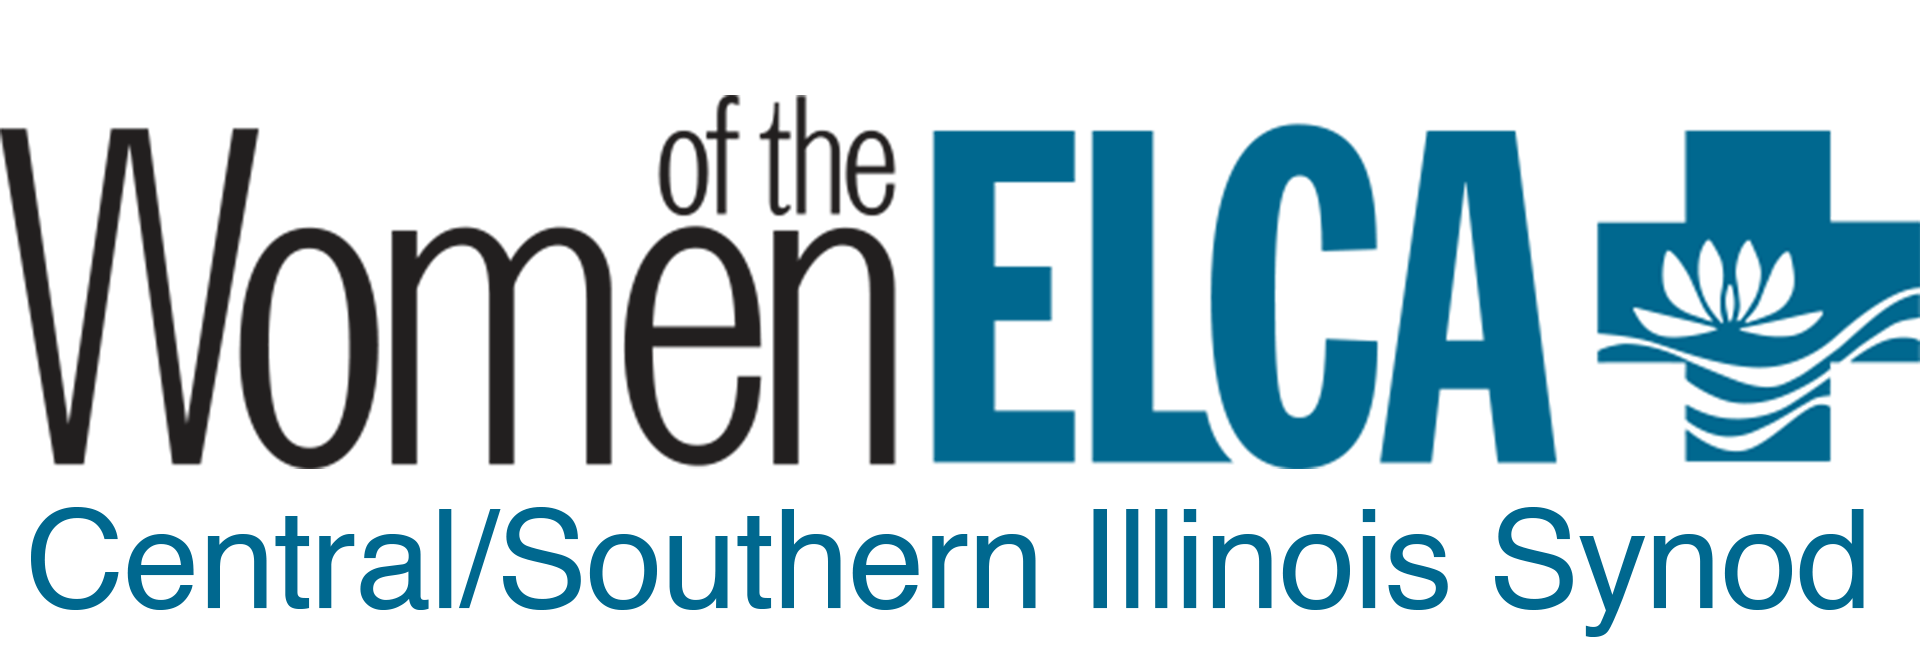 Illinois Women of the ELCA